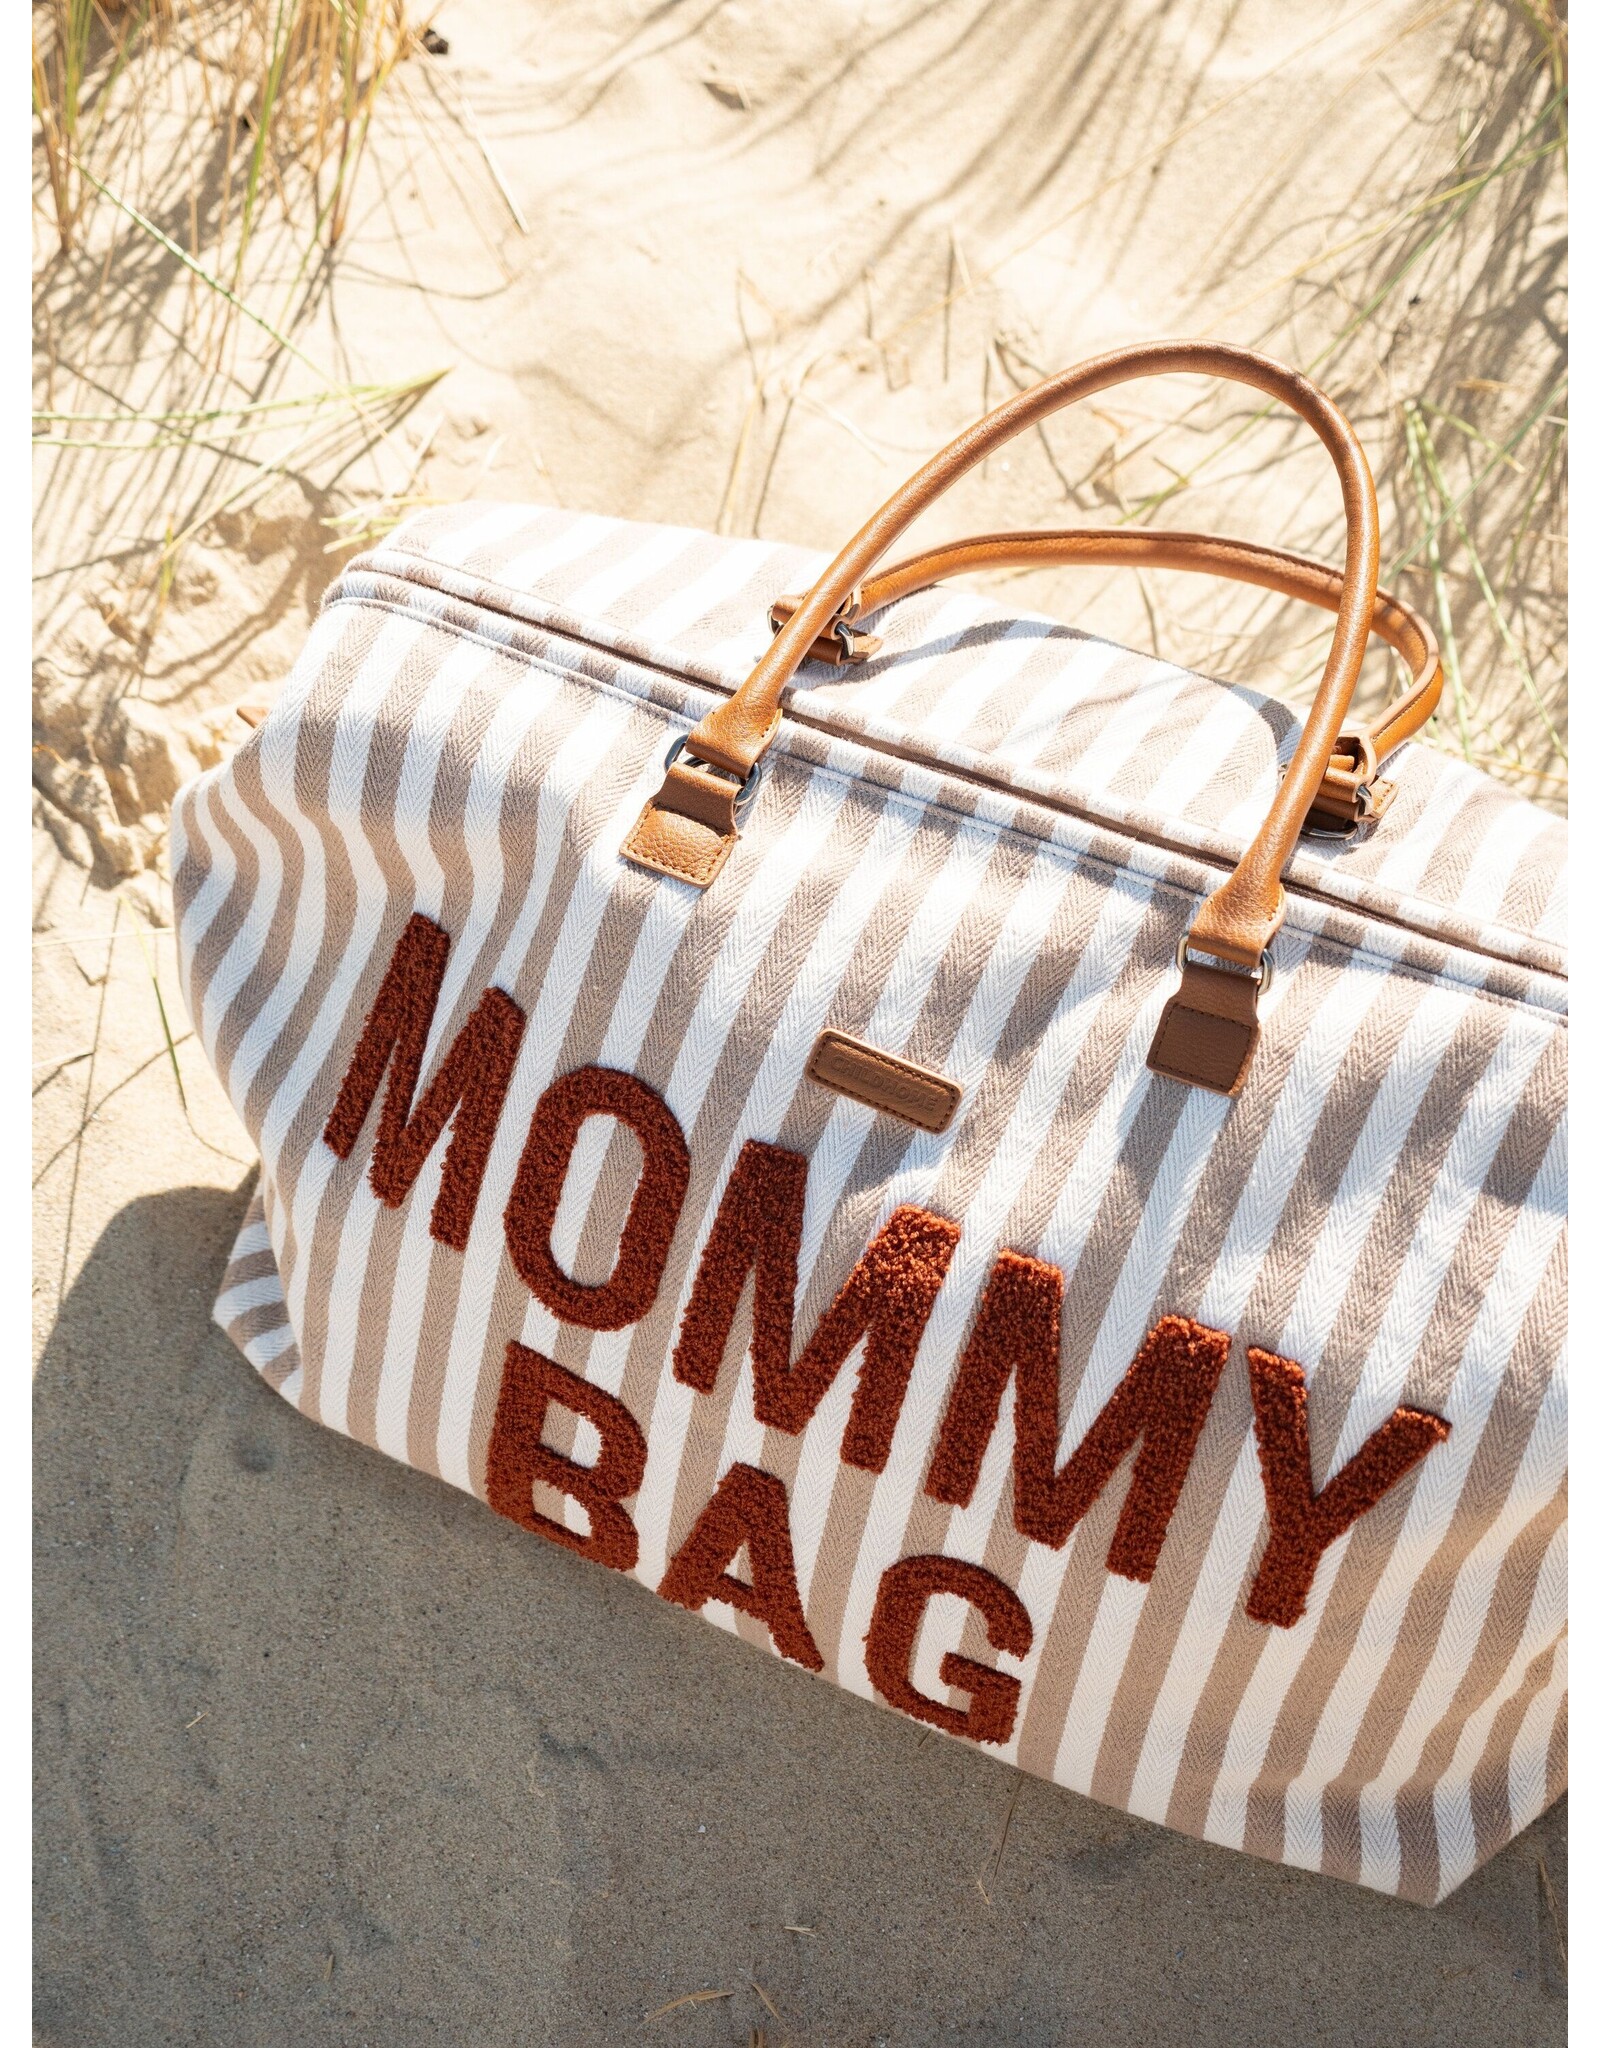 Childhome Mommy Bag - Rayures - nude